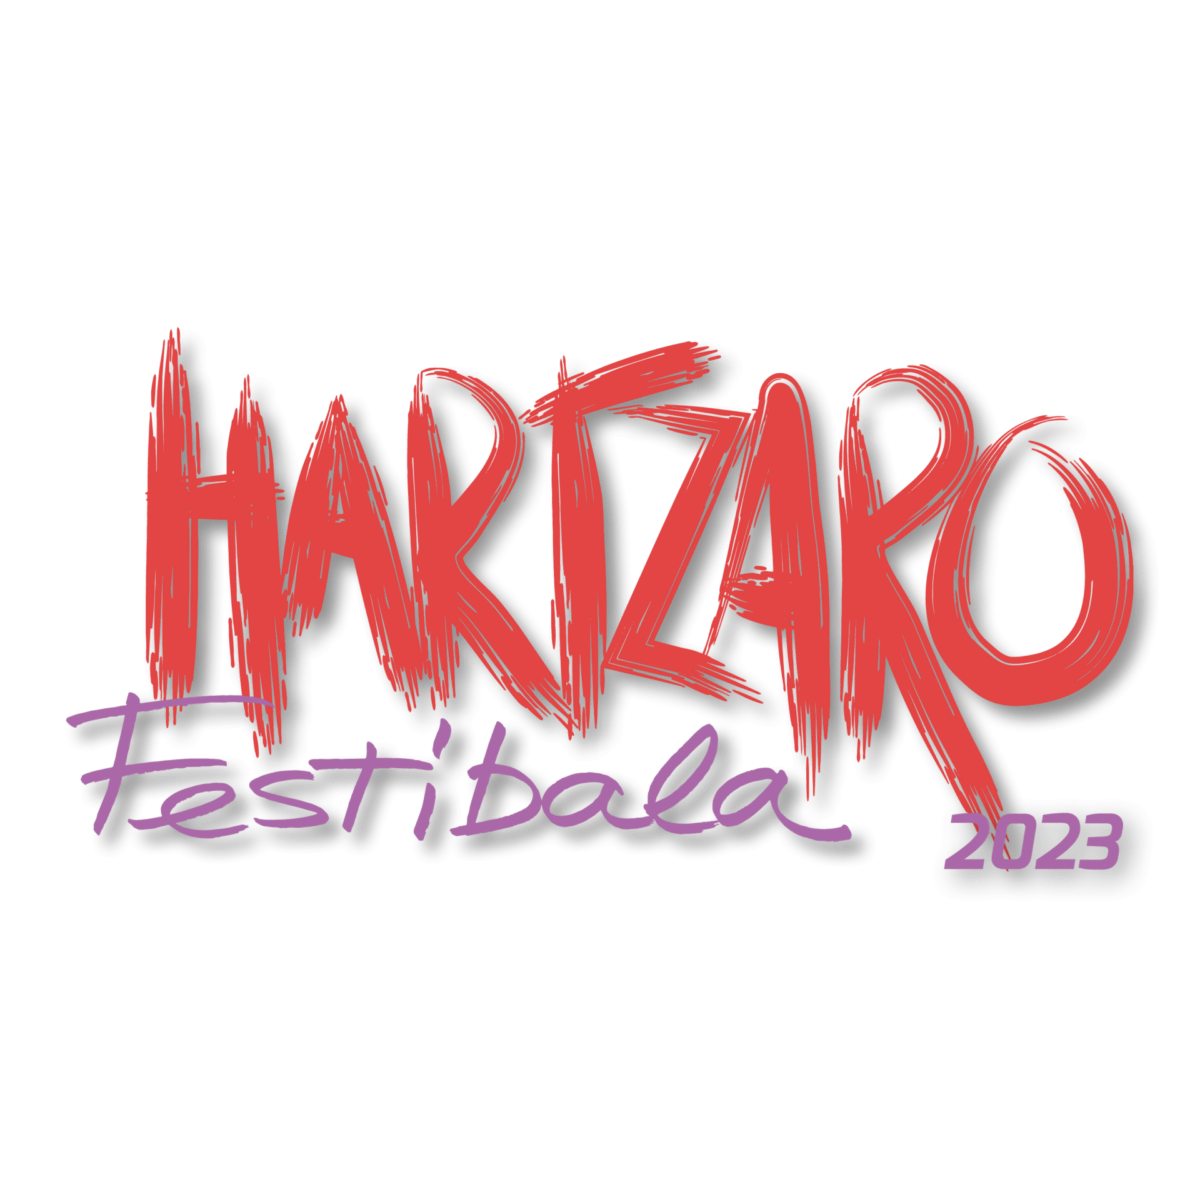 Affiche Festival Hartzaro 2023